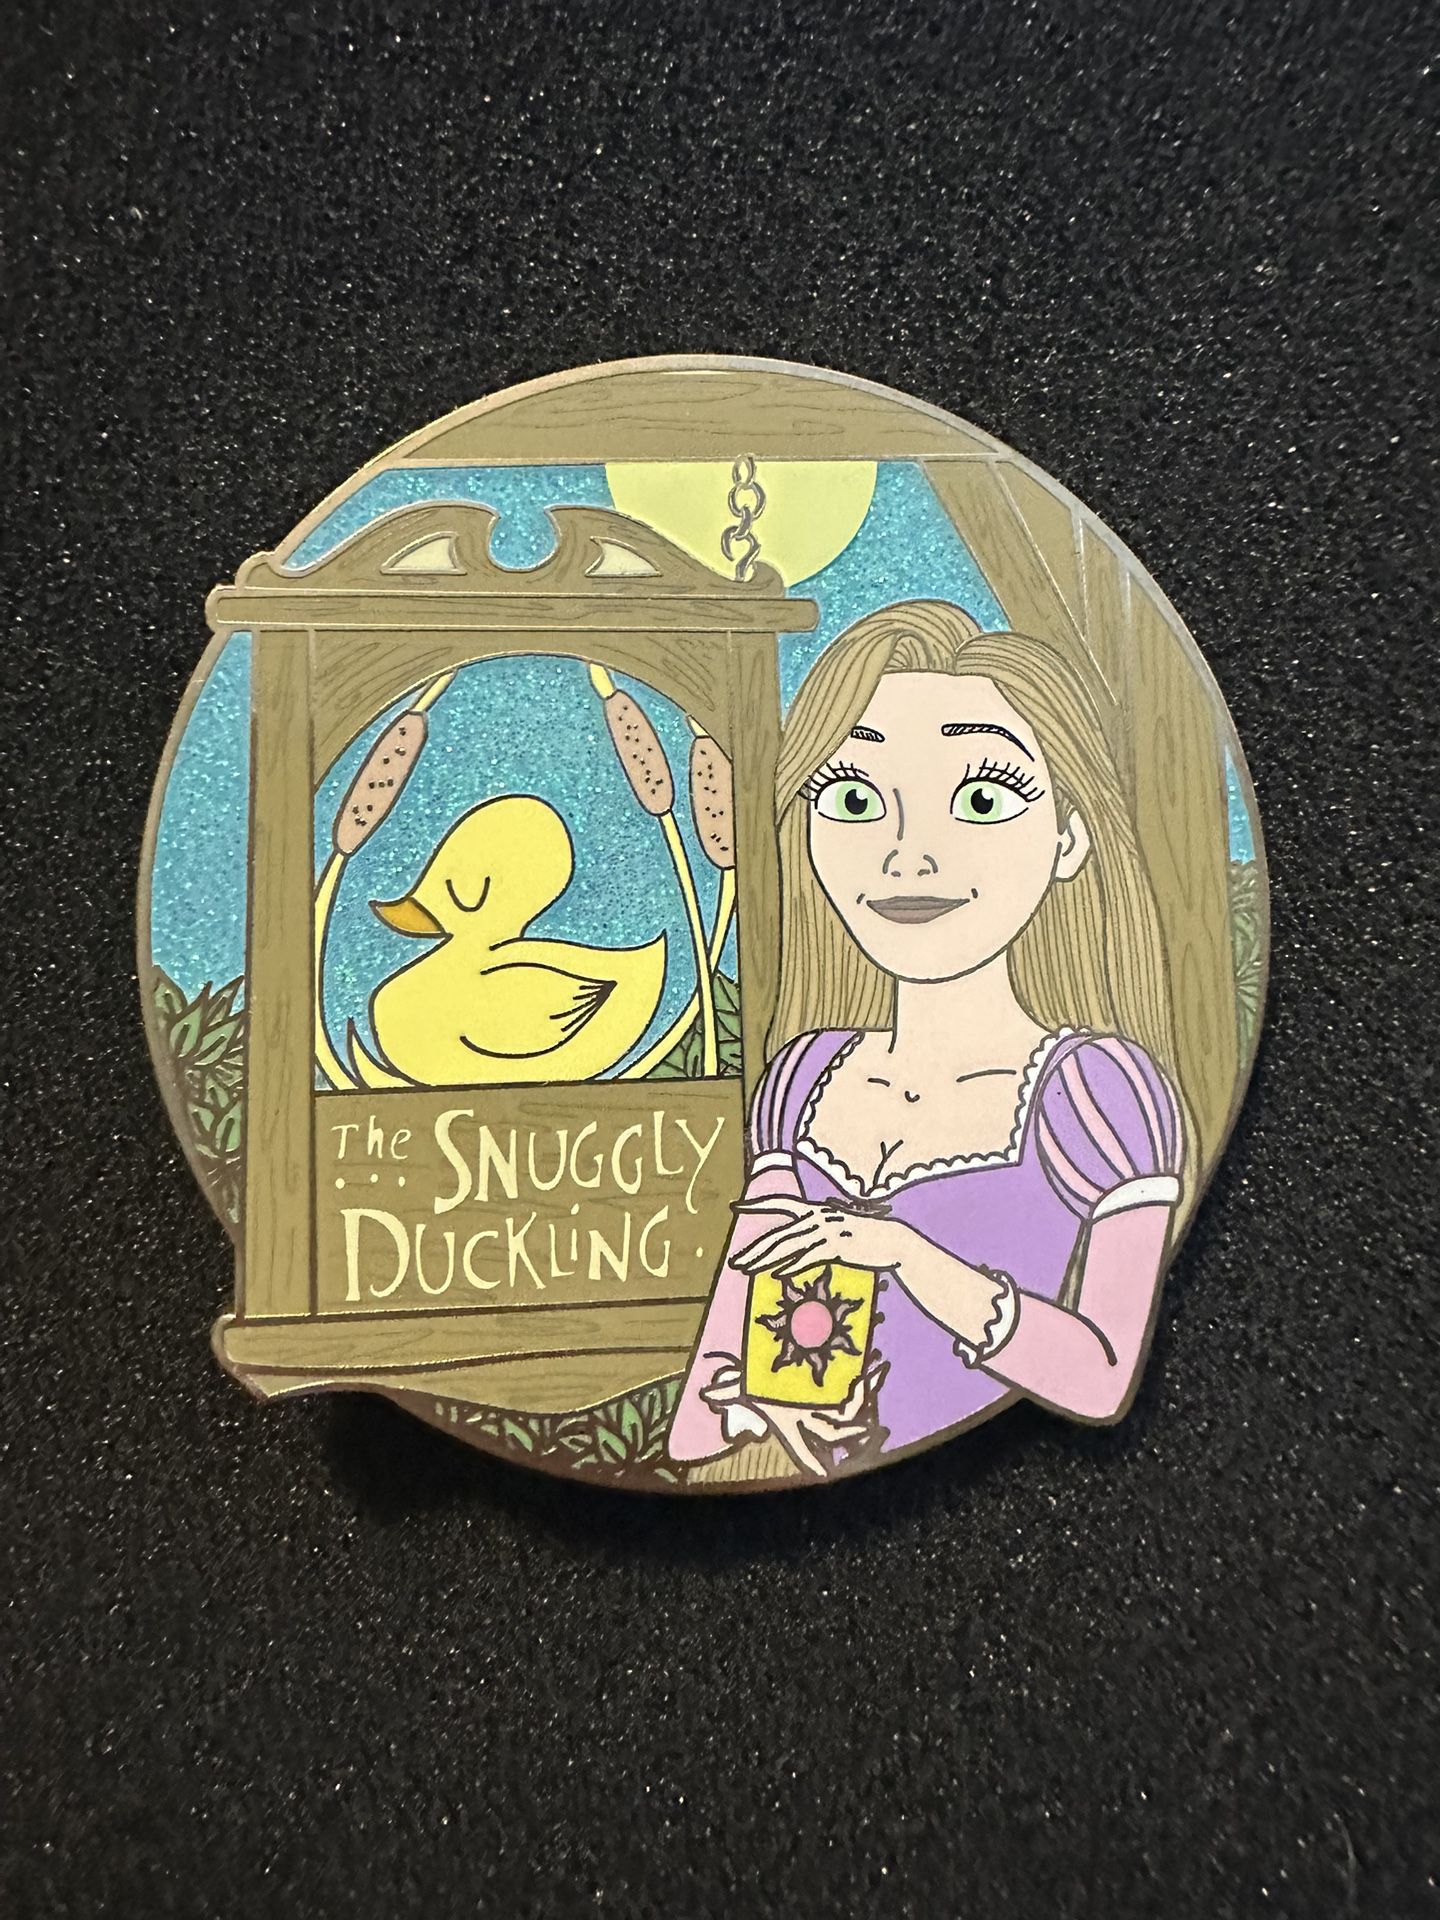 Disney Rapunzel Tangled Fantasy Pin